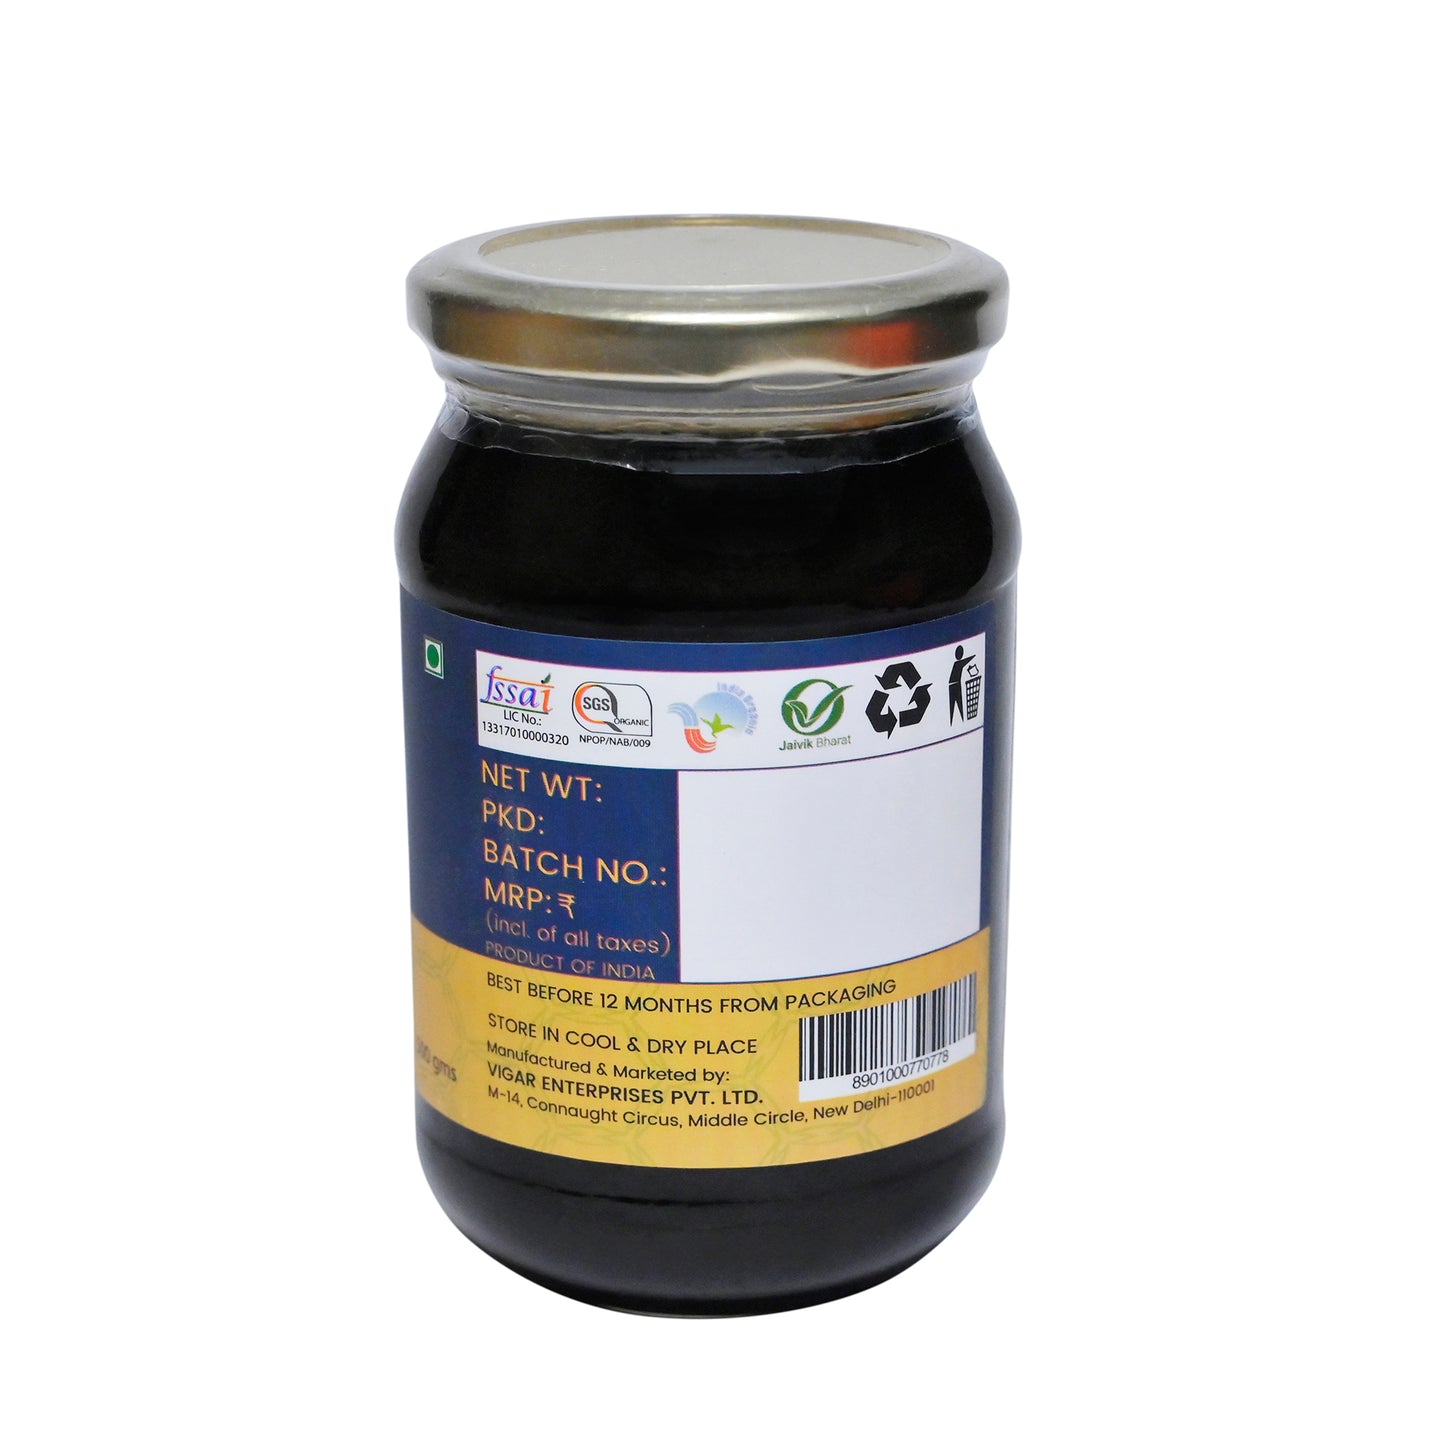 Organic Soul, Multi Floral Honey (500 gm), Multi Floral Raw Honey